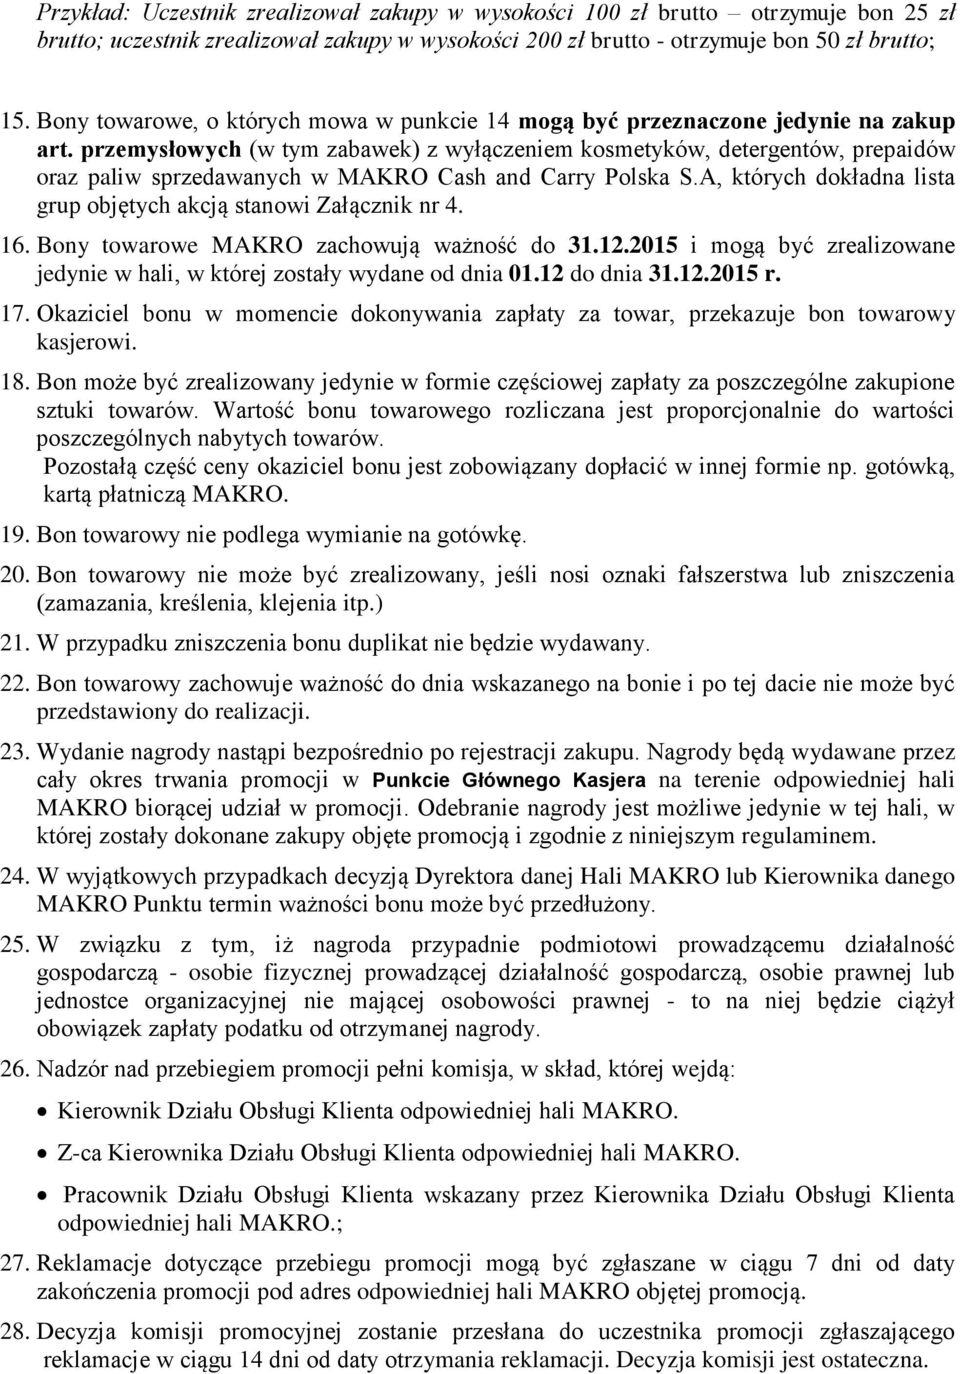 REGULAMIN PROMOCJI DLA KLIENTÓW MAKRO CASH AND CARRY POLSKA S.A. Zabawki  -25% - PDF Free Download